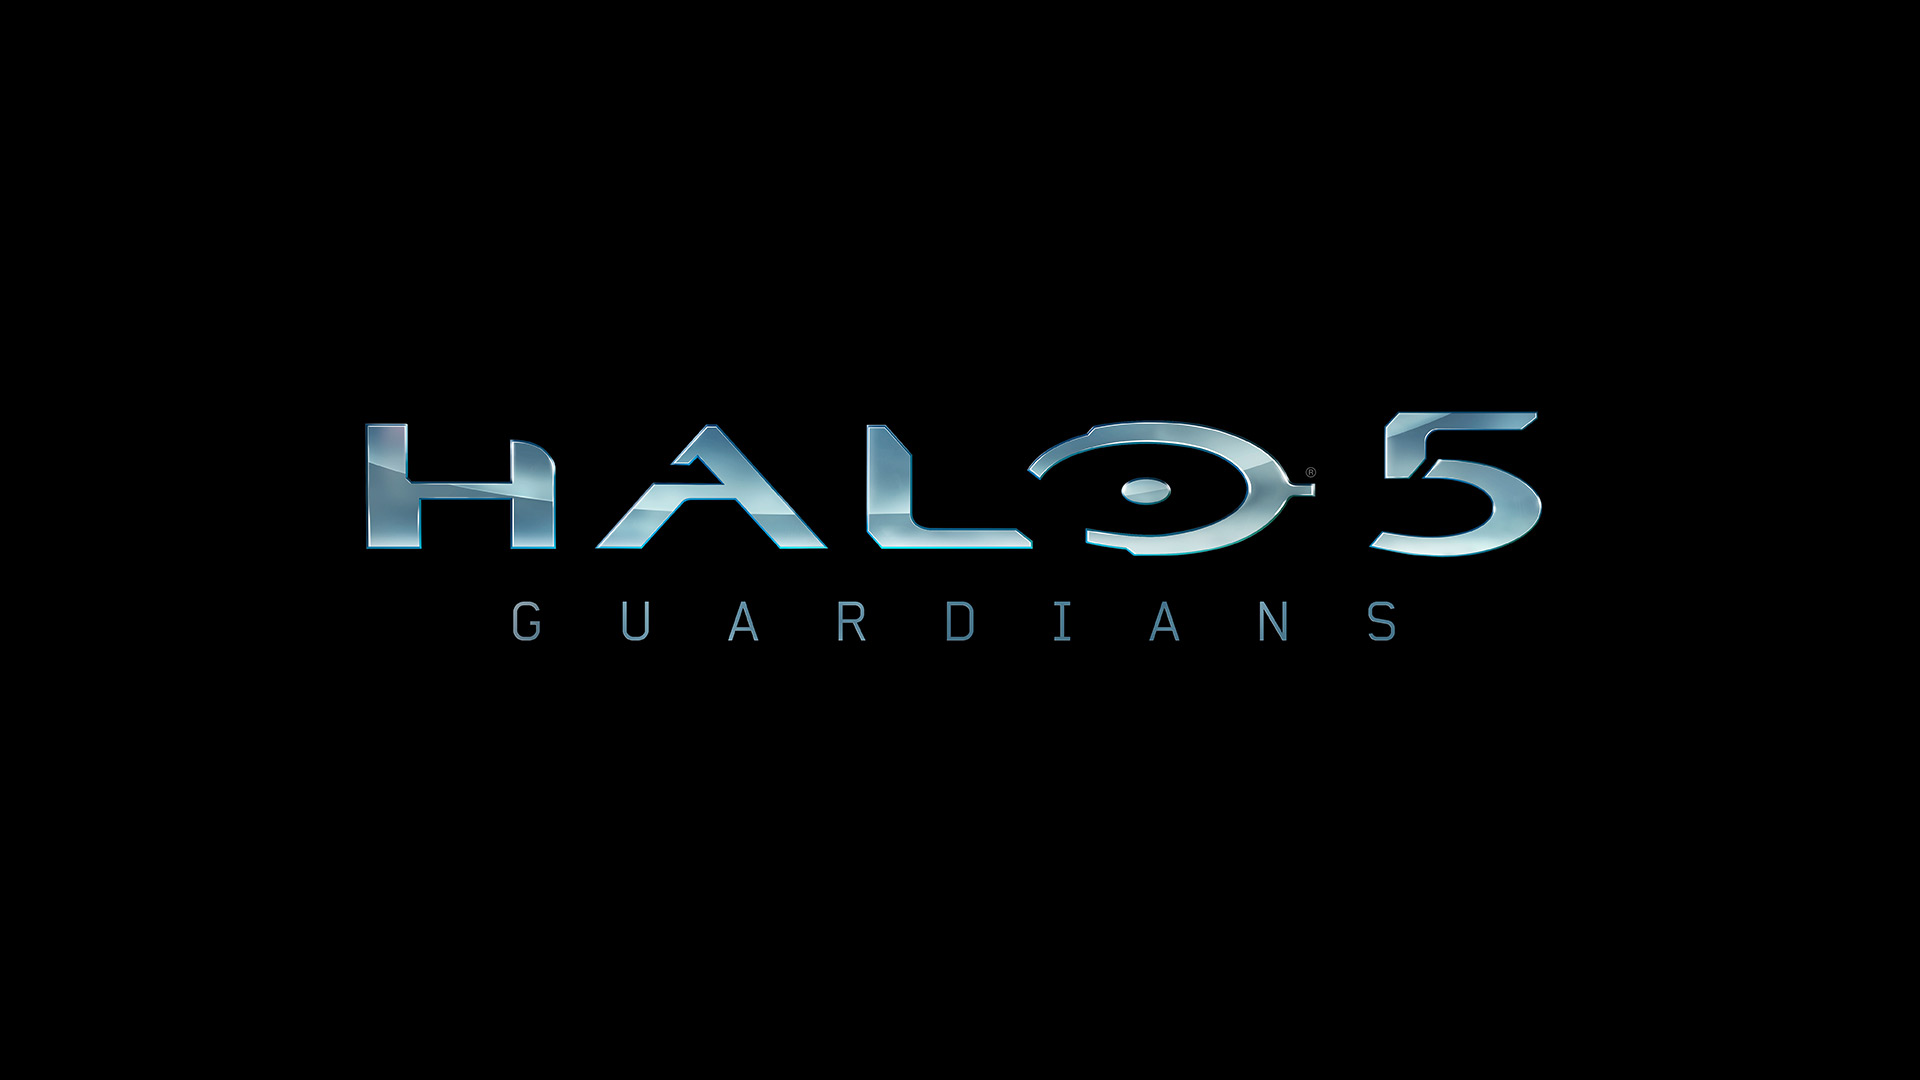 halo-5-guardians-logo-1920x1080-7564e67a4b0e4a098adf71ed57992113.jpg